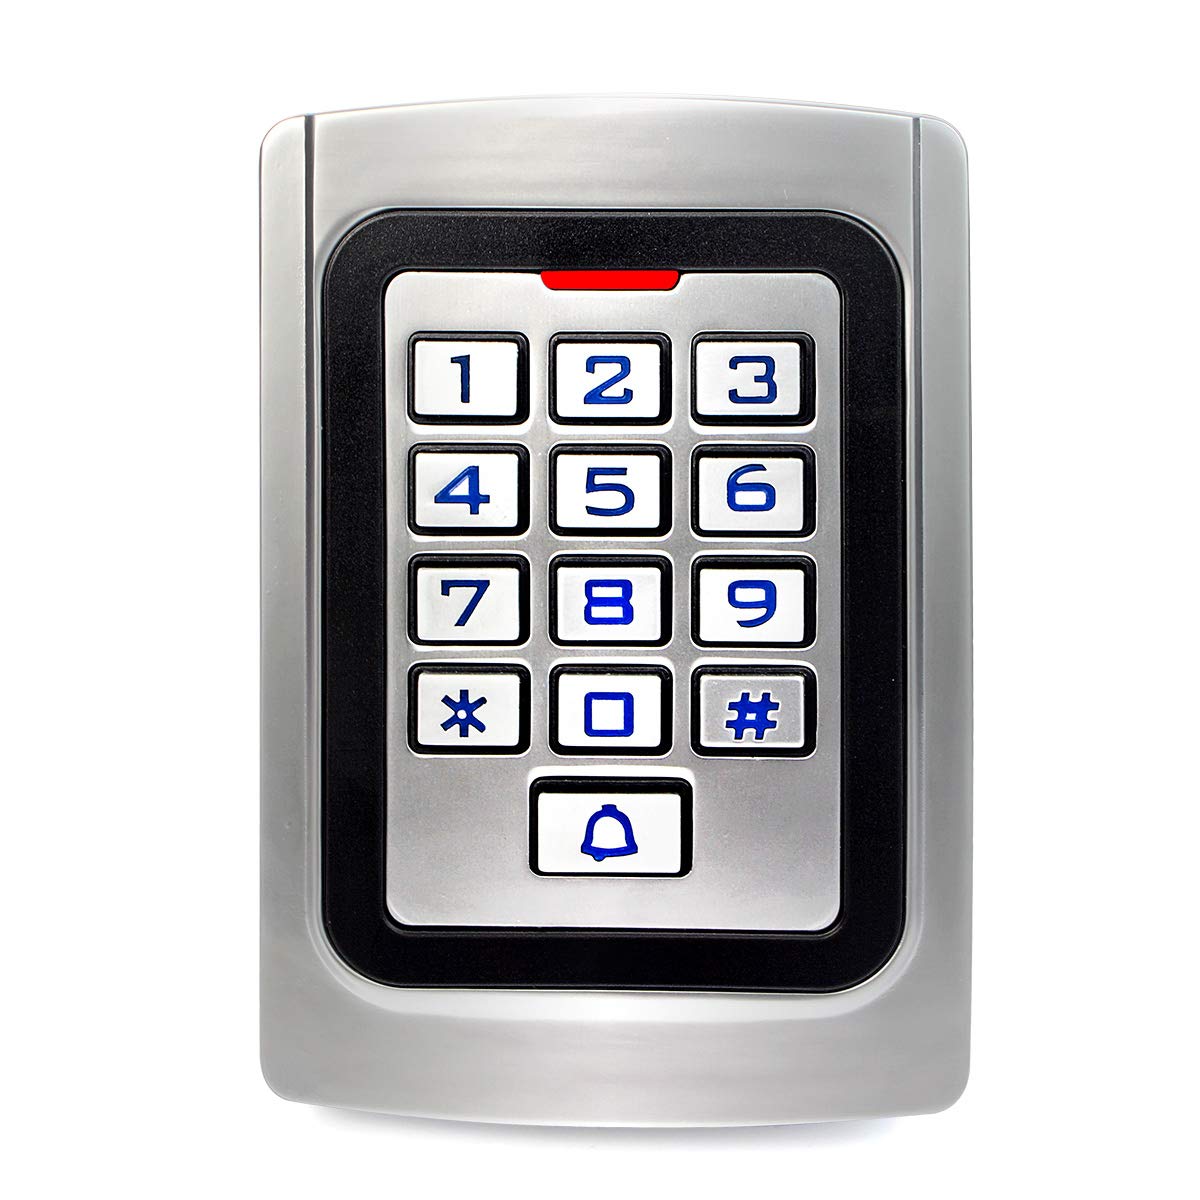 Retekess T-AC04 Garage Keyless Entry Pad,Access Control Keypad,Door Keypad,Wiegand 26 PIN Code RFID Keypad,IP68 Waterproof,2000 Users